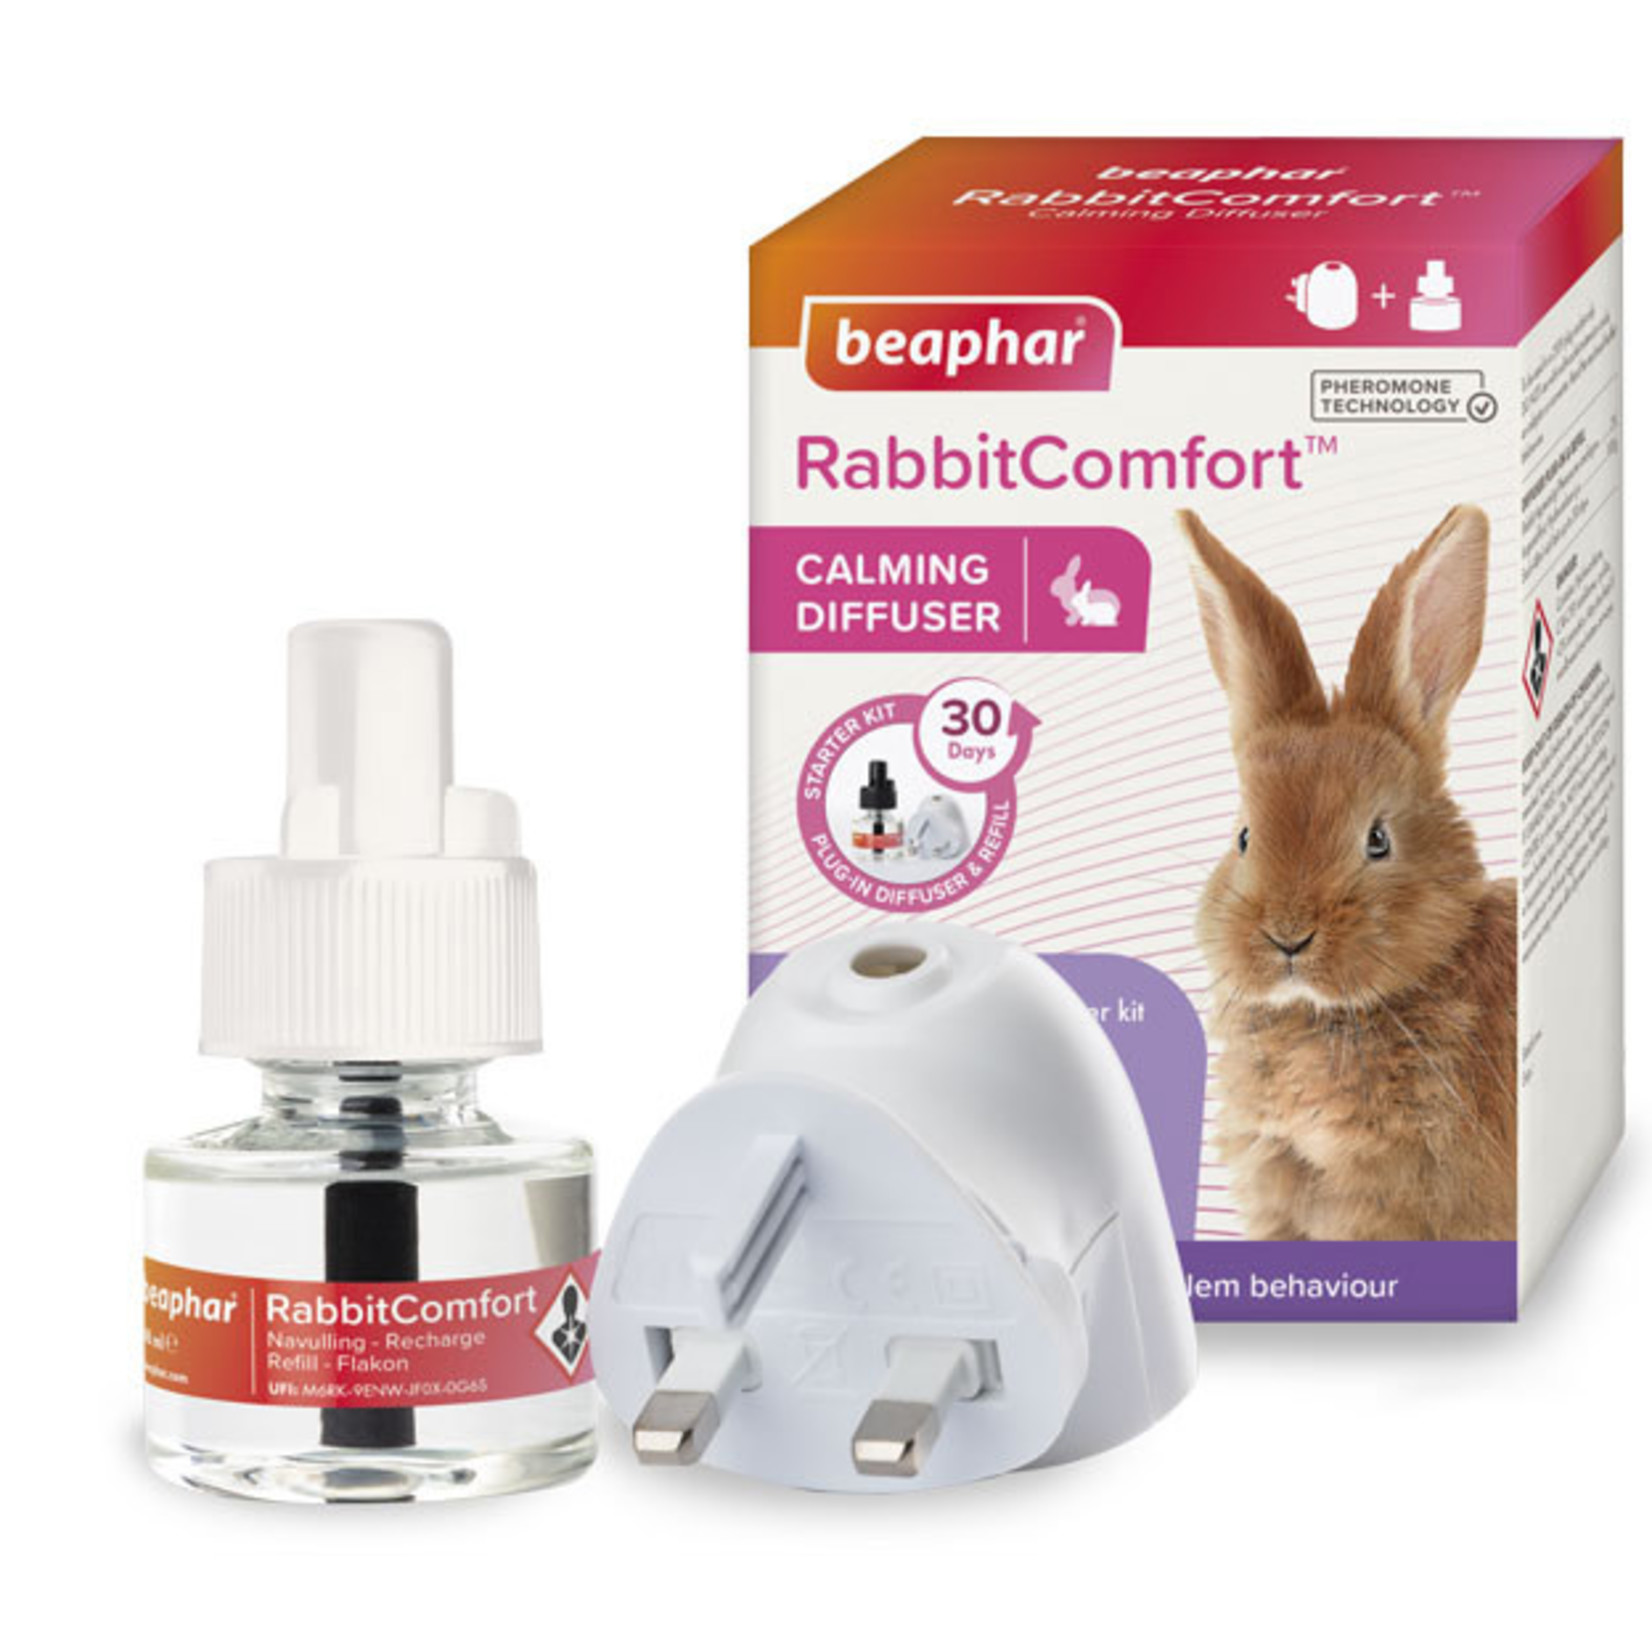 Beaphar RabbitComfort Calming Diffuser*